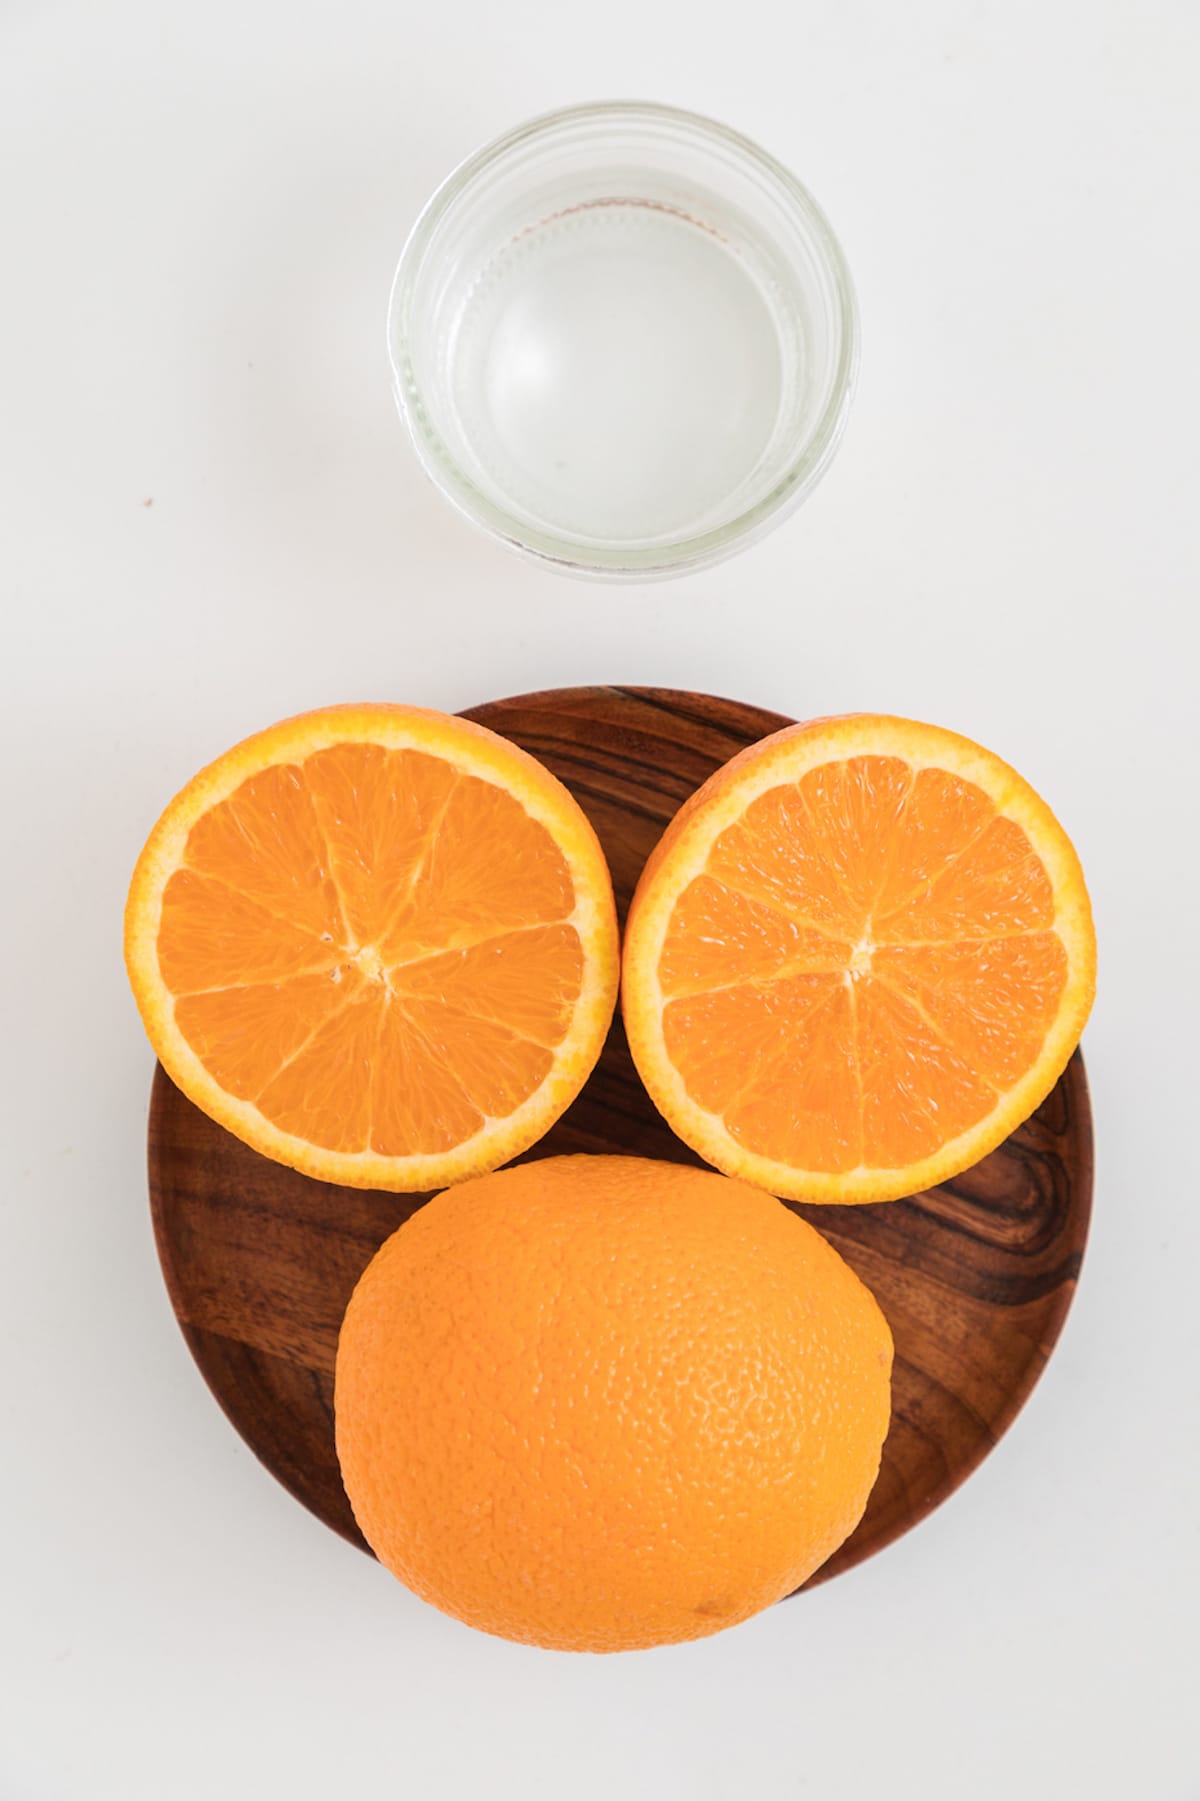 ingredients for making whole blended orange juice.